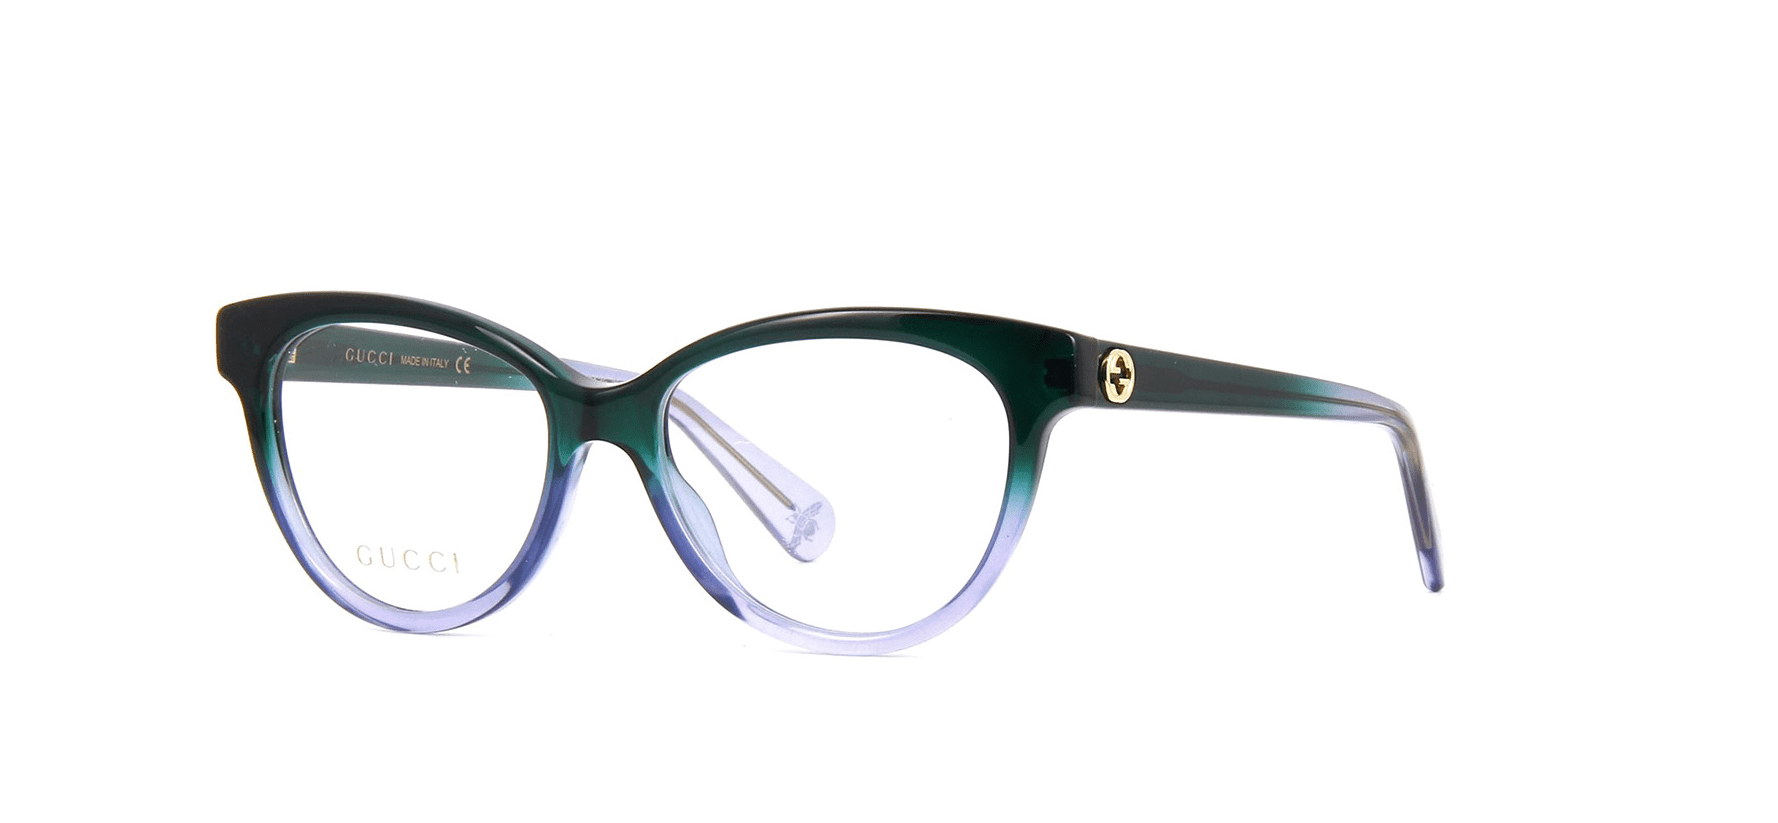 gucci green eyeglass frames